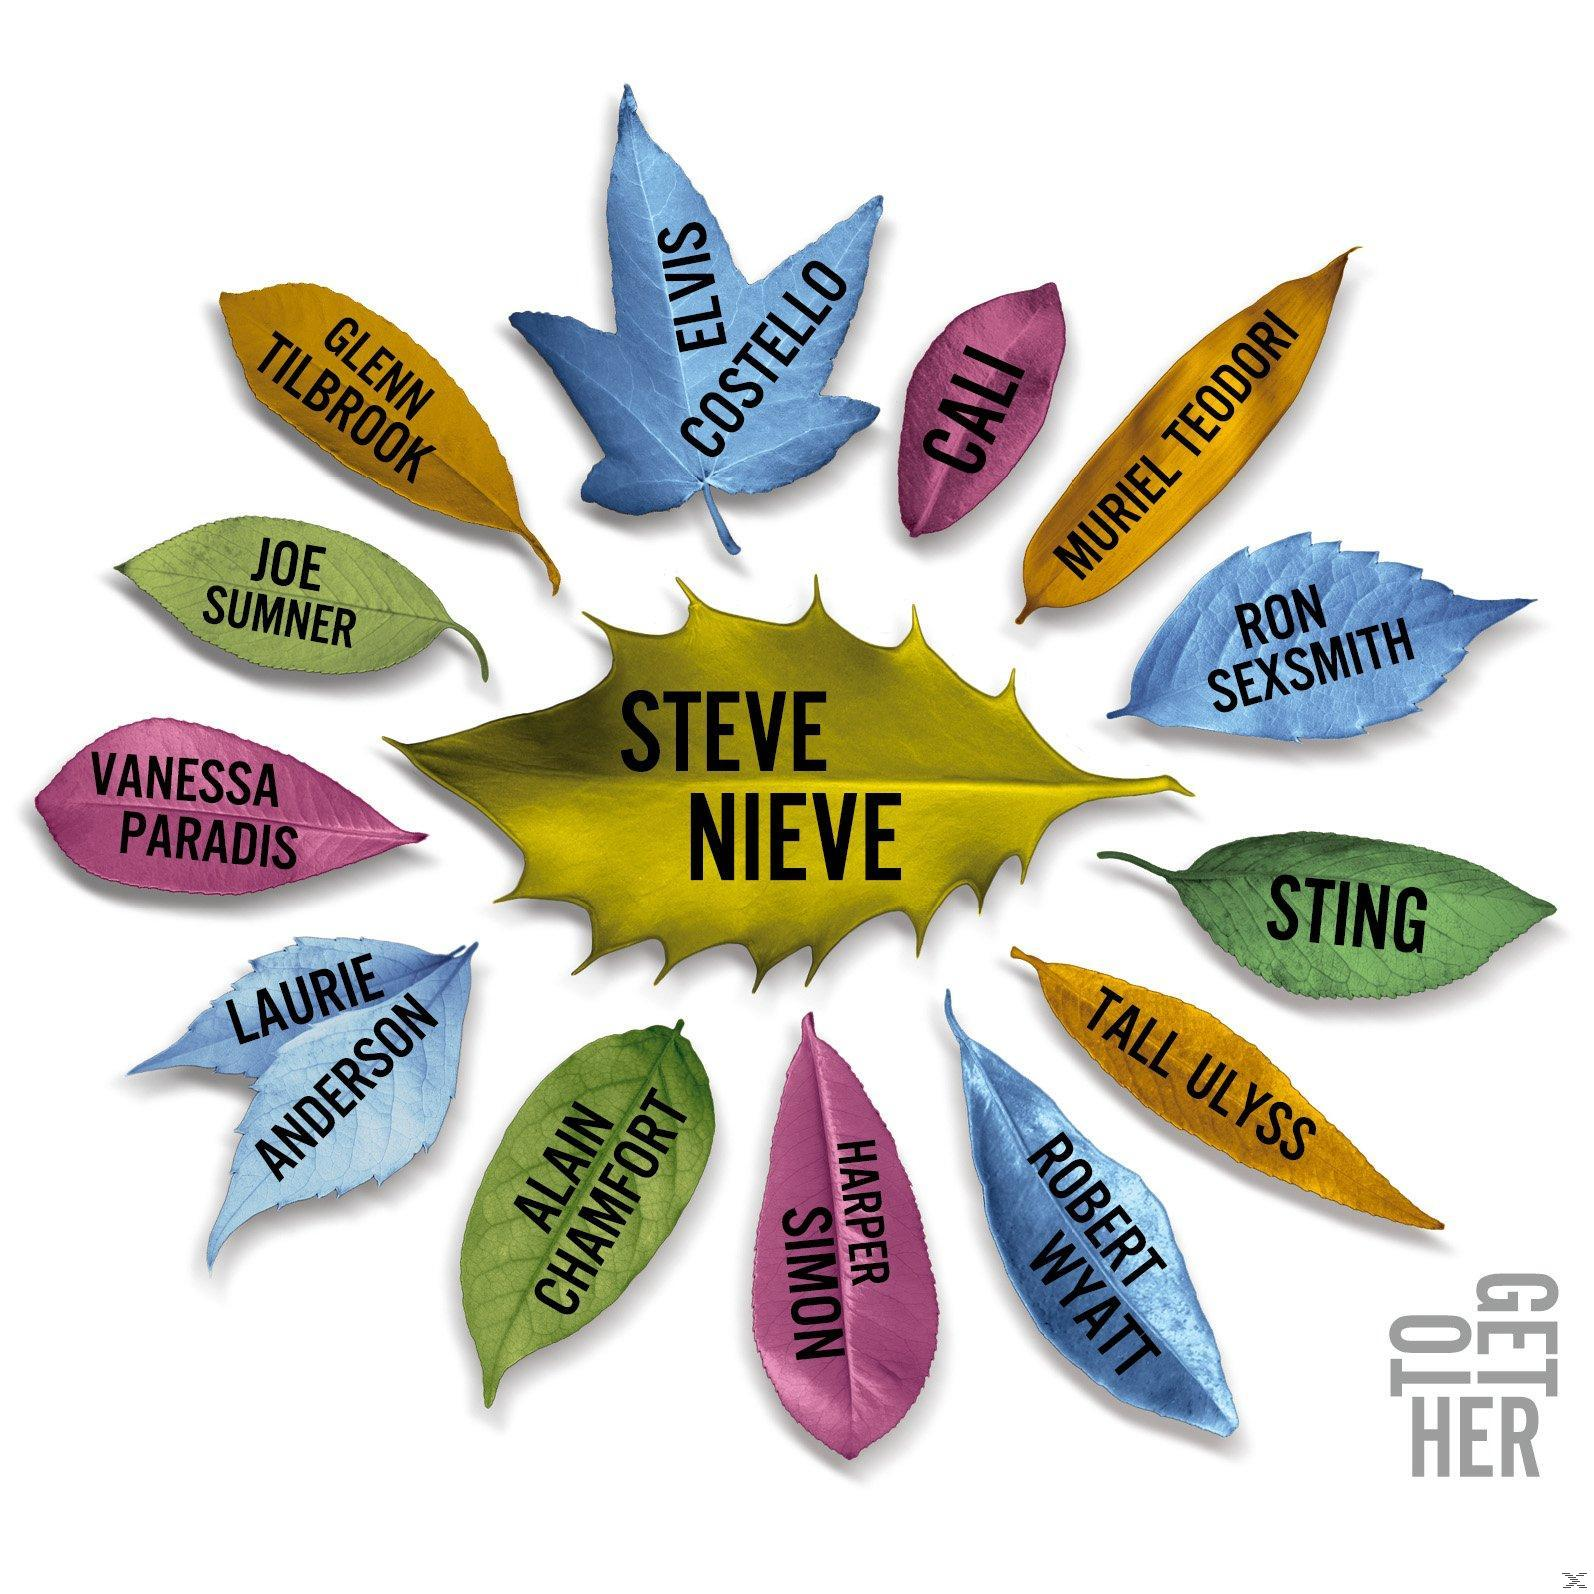 Steve Nieve - (CD) - Together